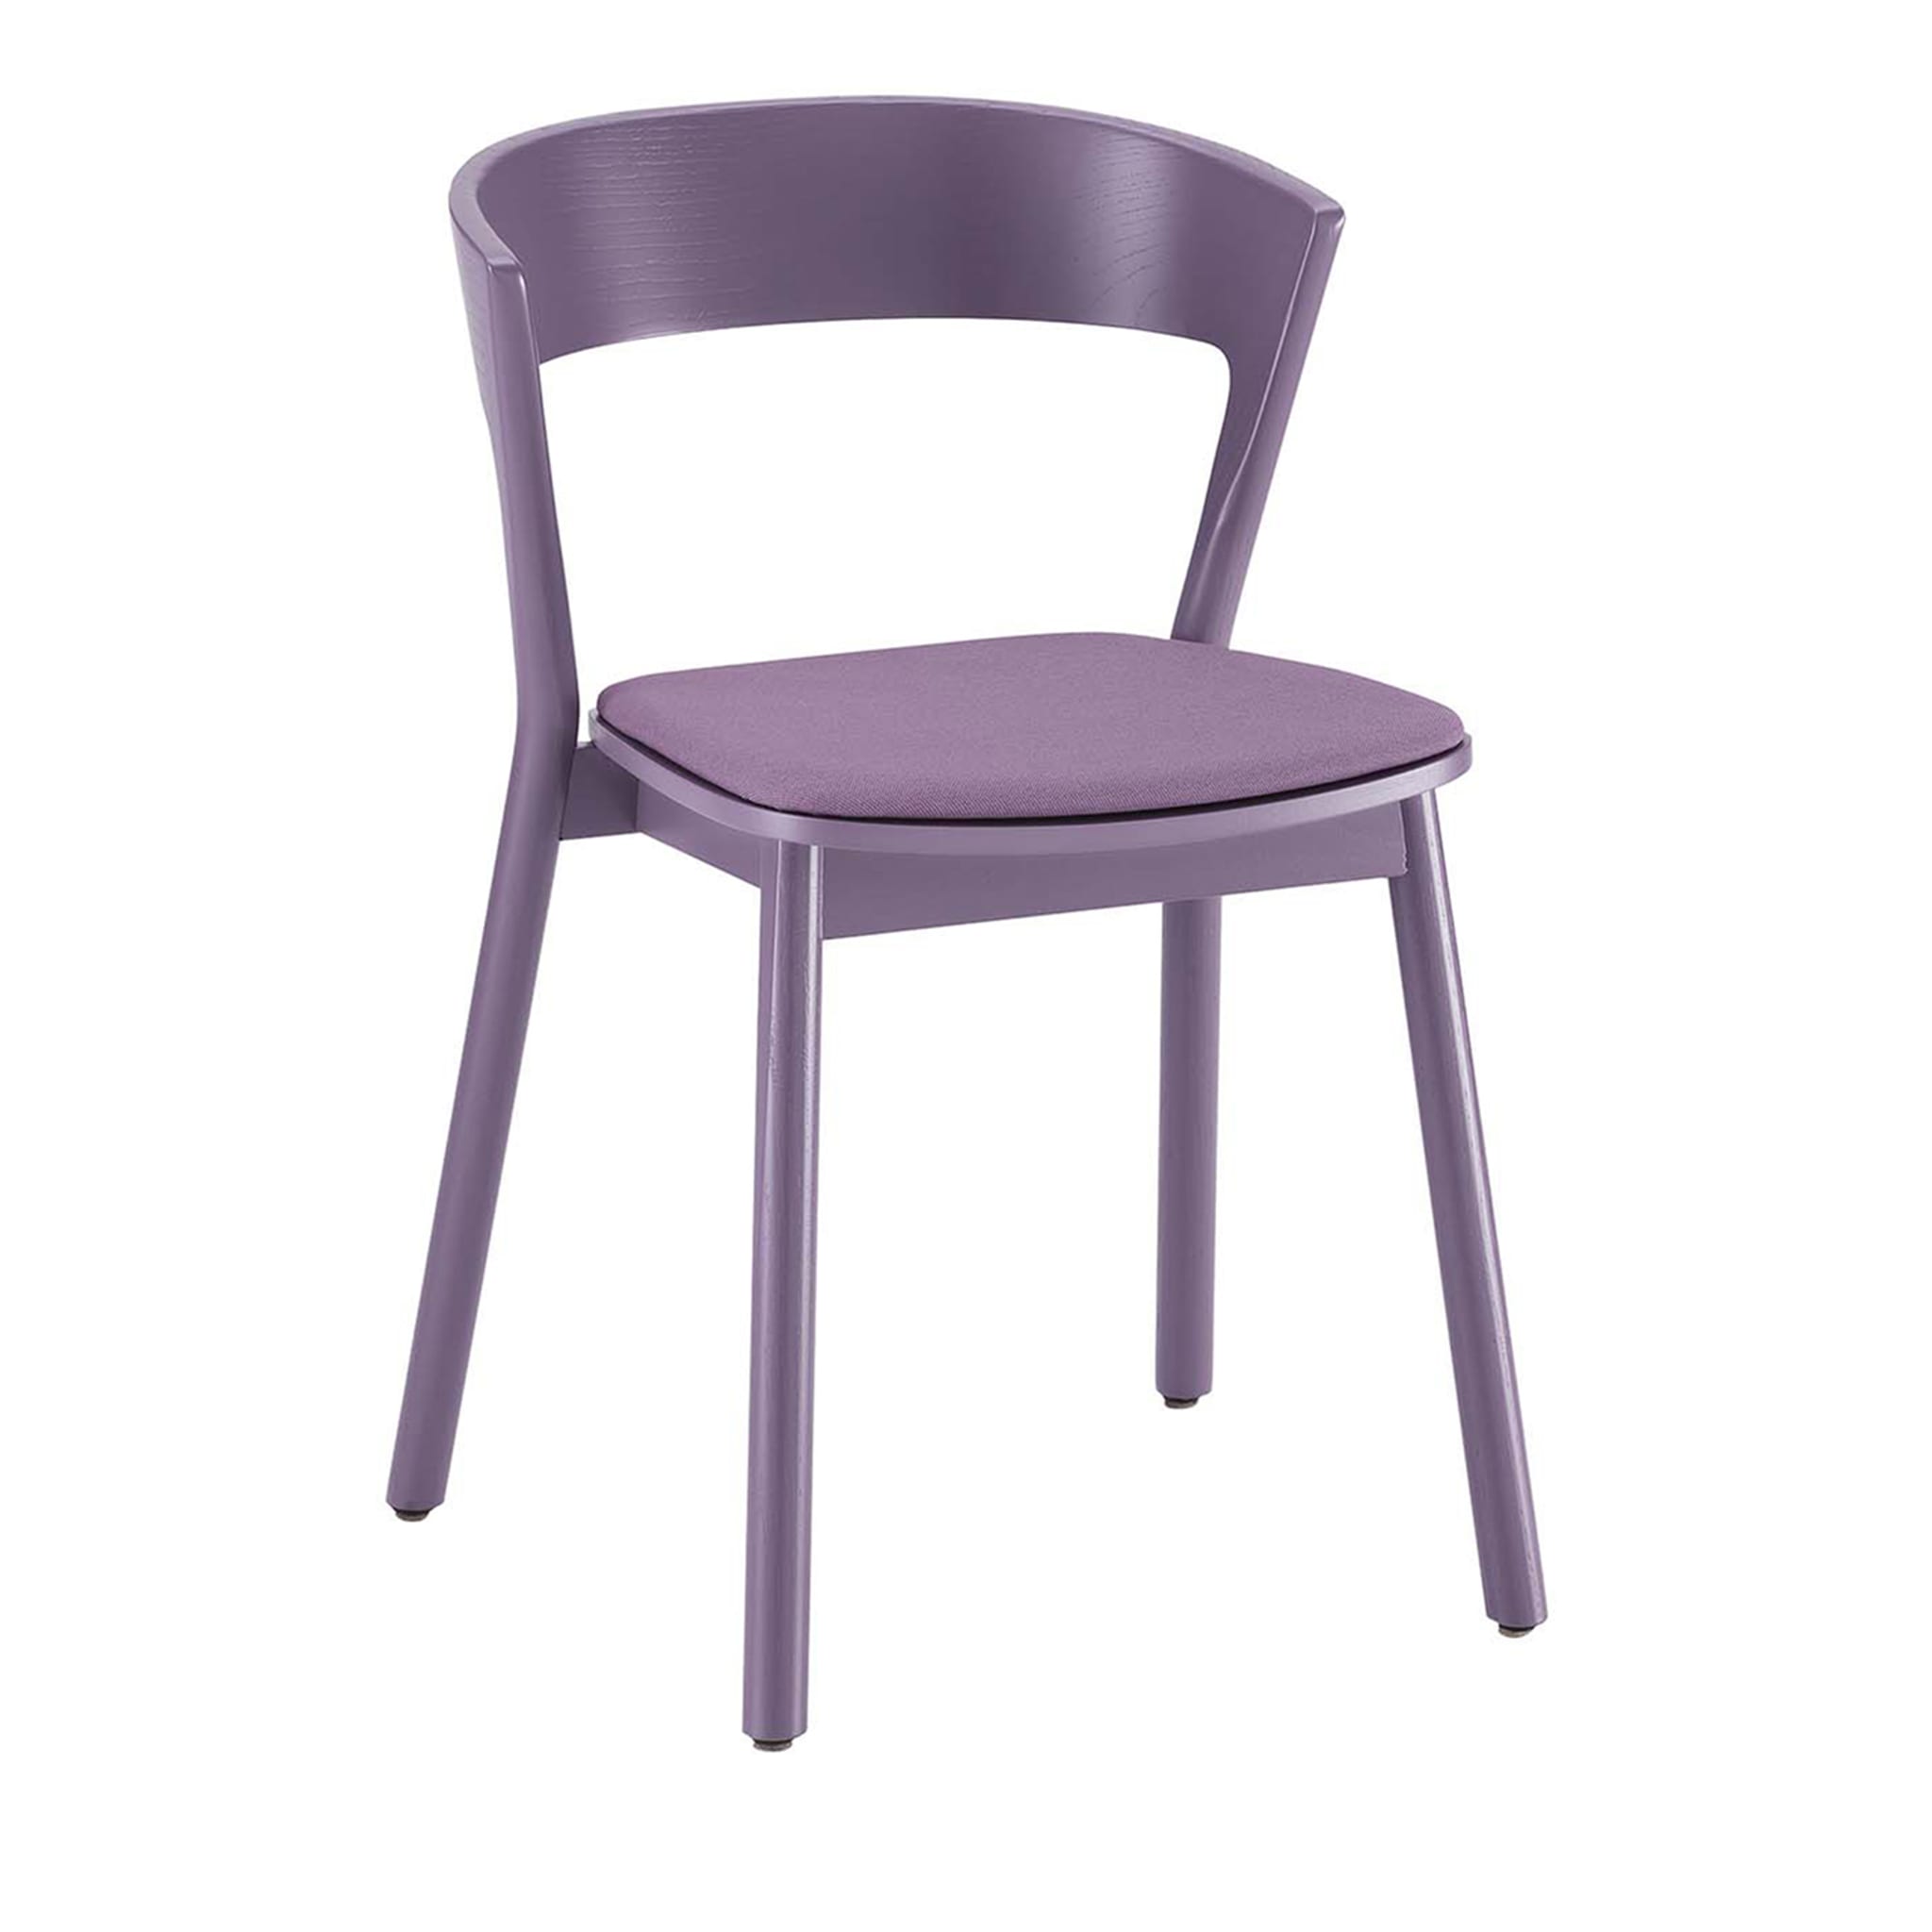 Edith Purple Chair by Massimo Broglio - Main view